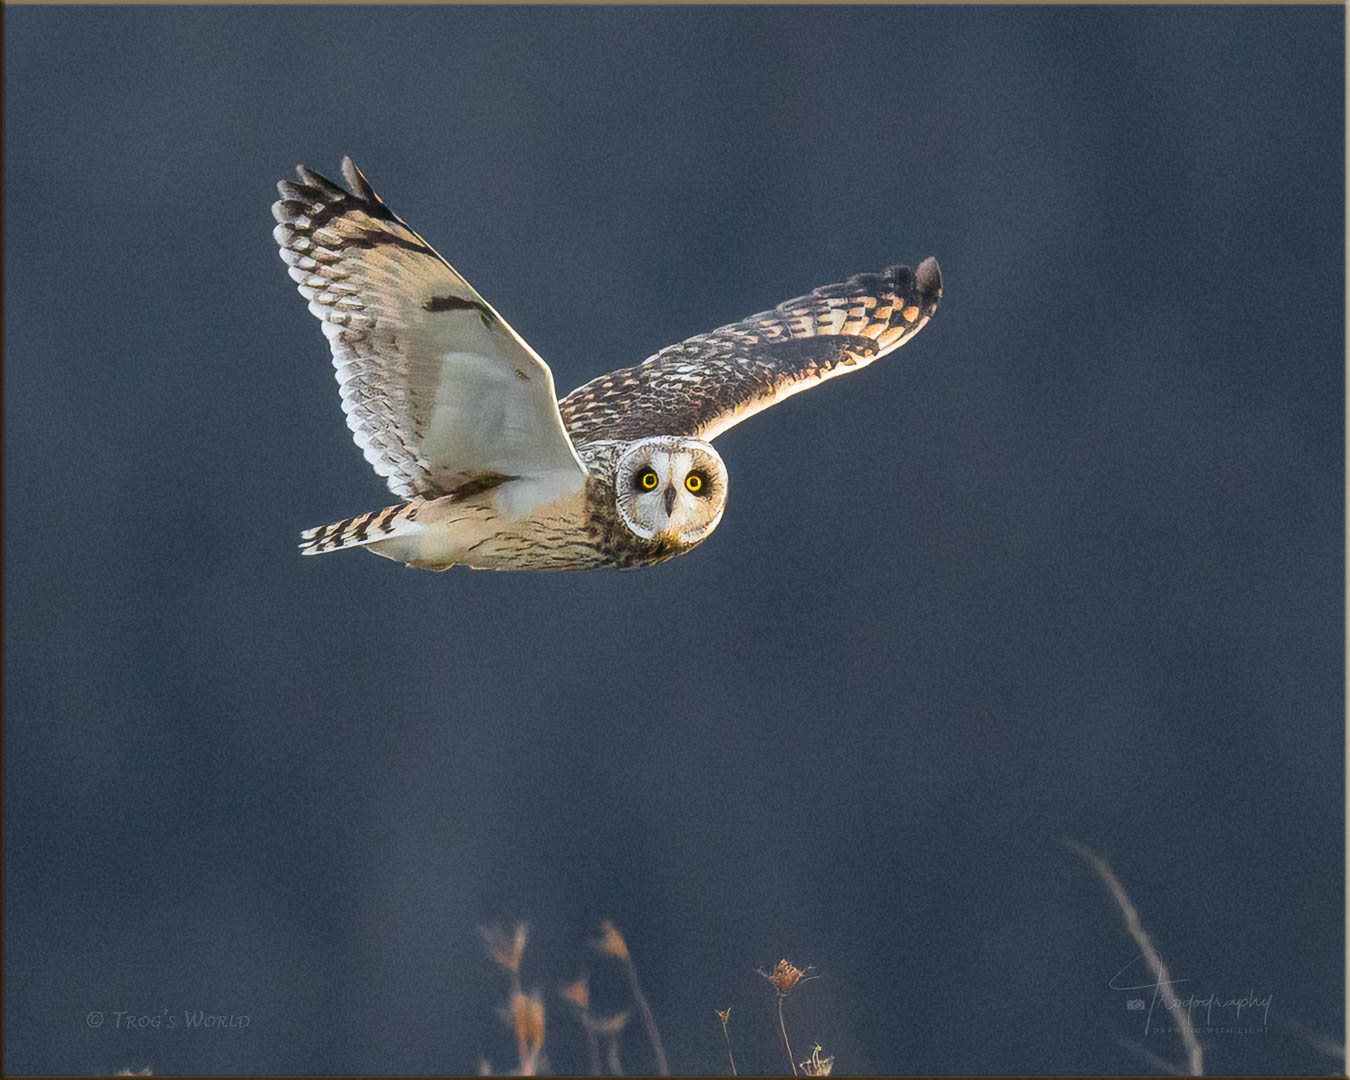 Short-eared Owl in flight during evening